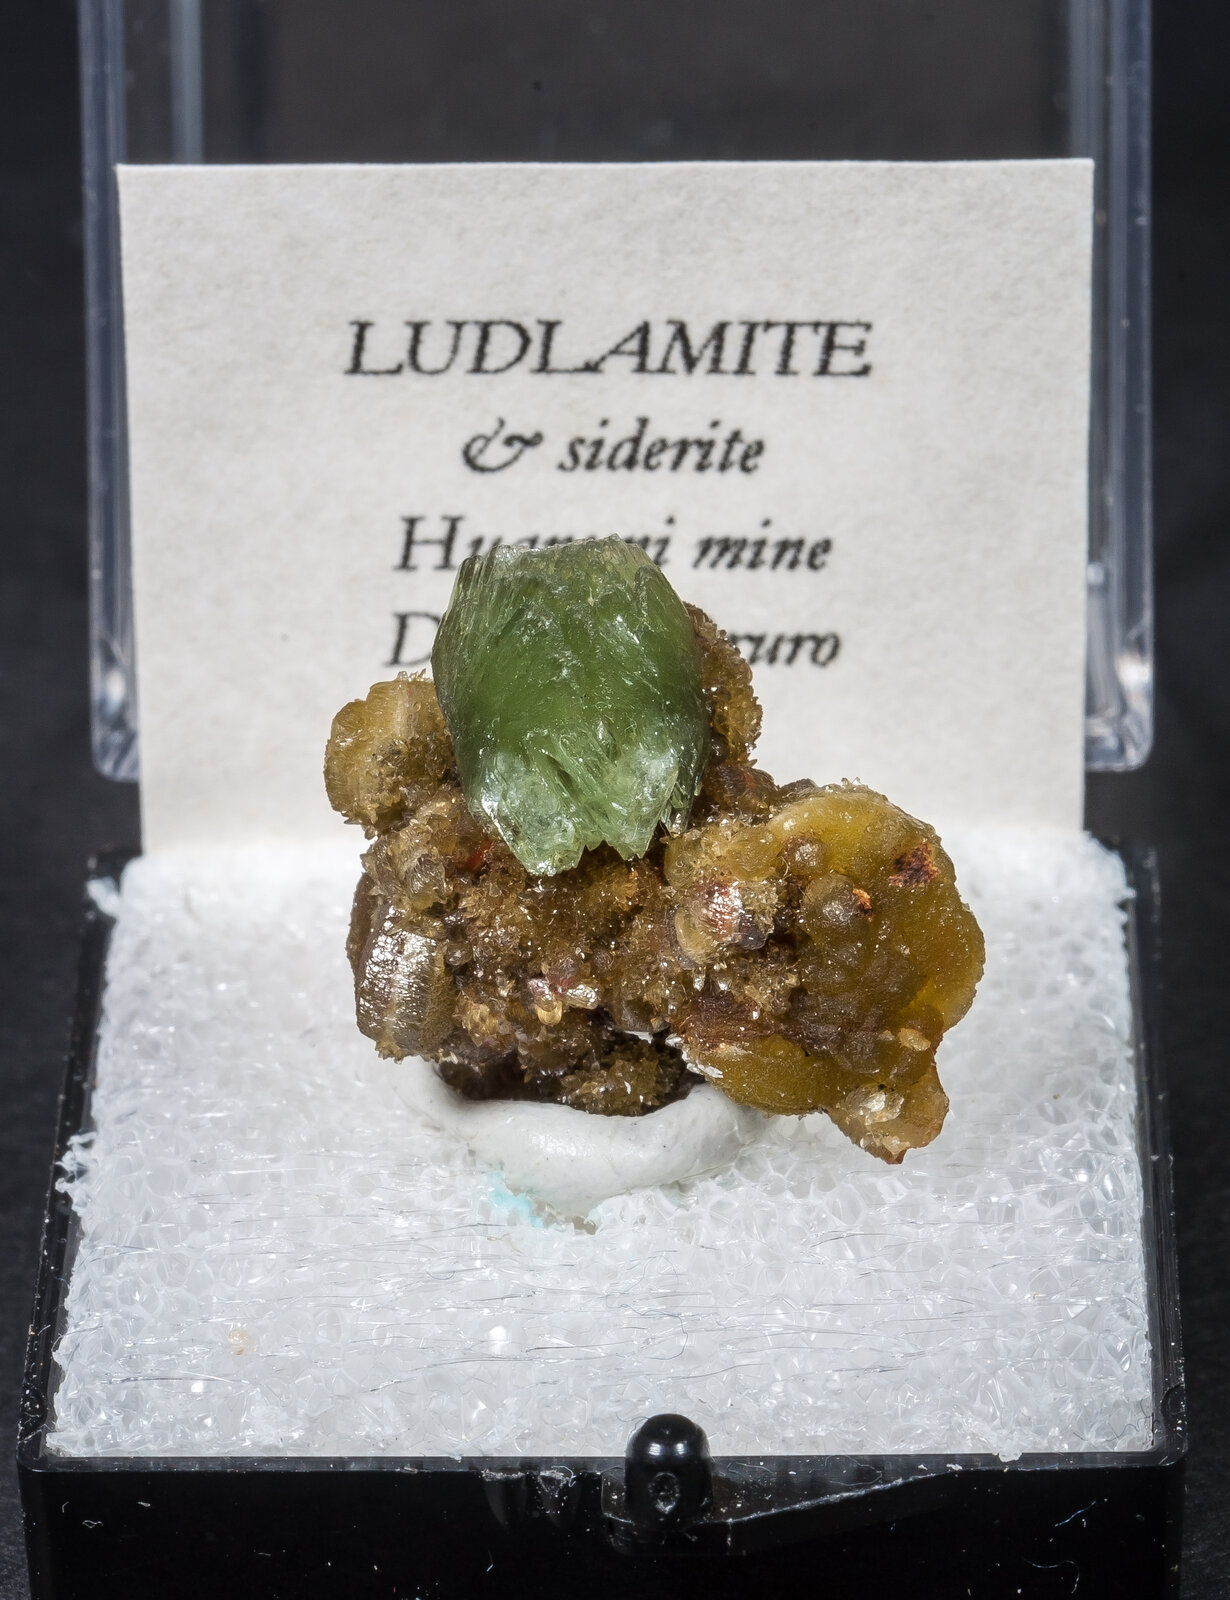 specimens/s_imagesAM8/Ludlamite-MT13AM8f1.jpg